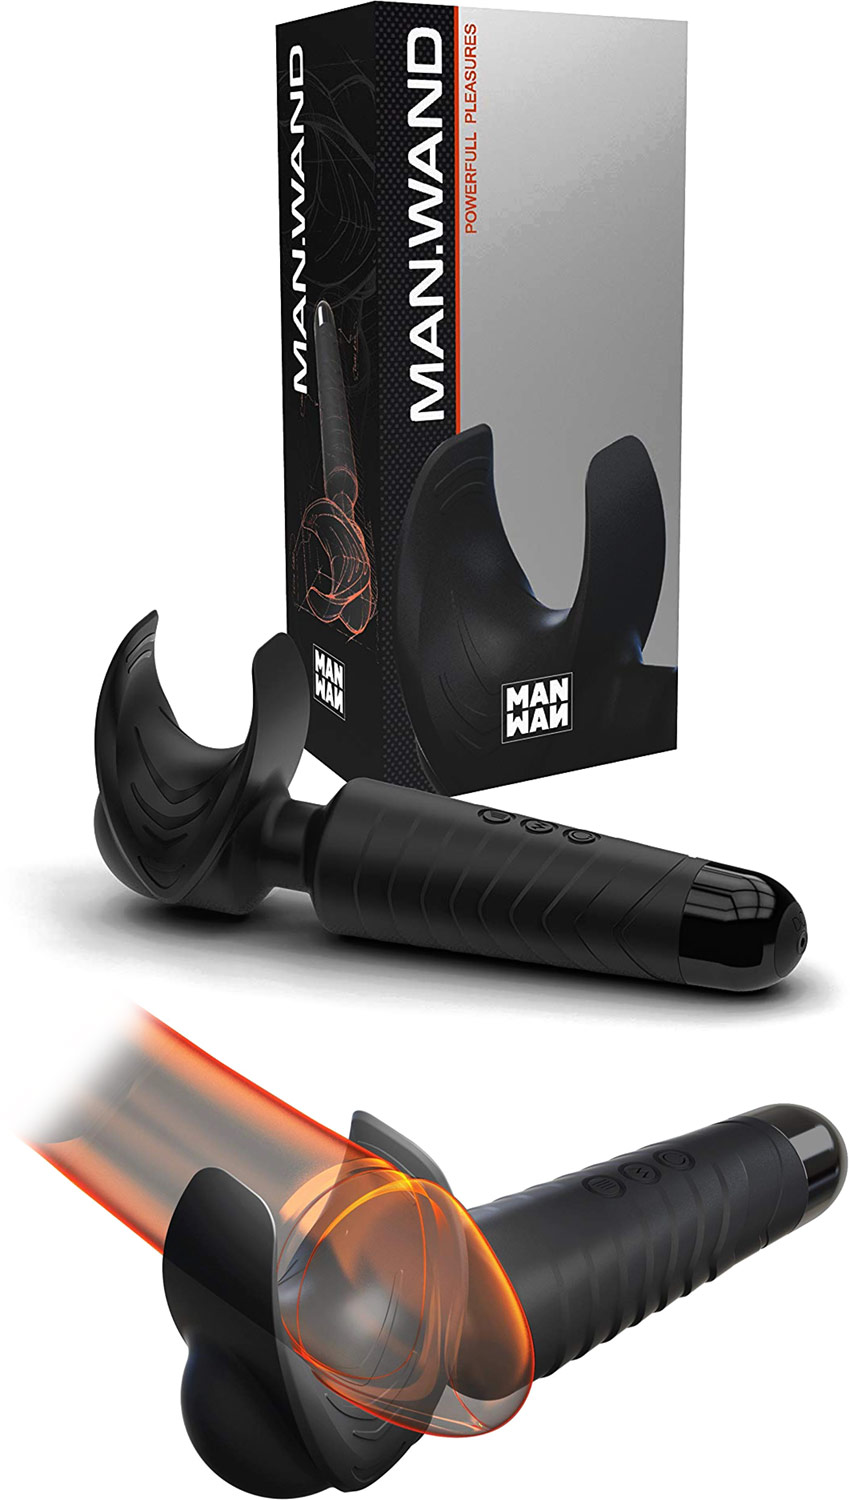 MAN.WAND wand vibrator for masturbation